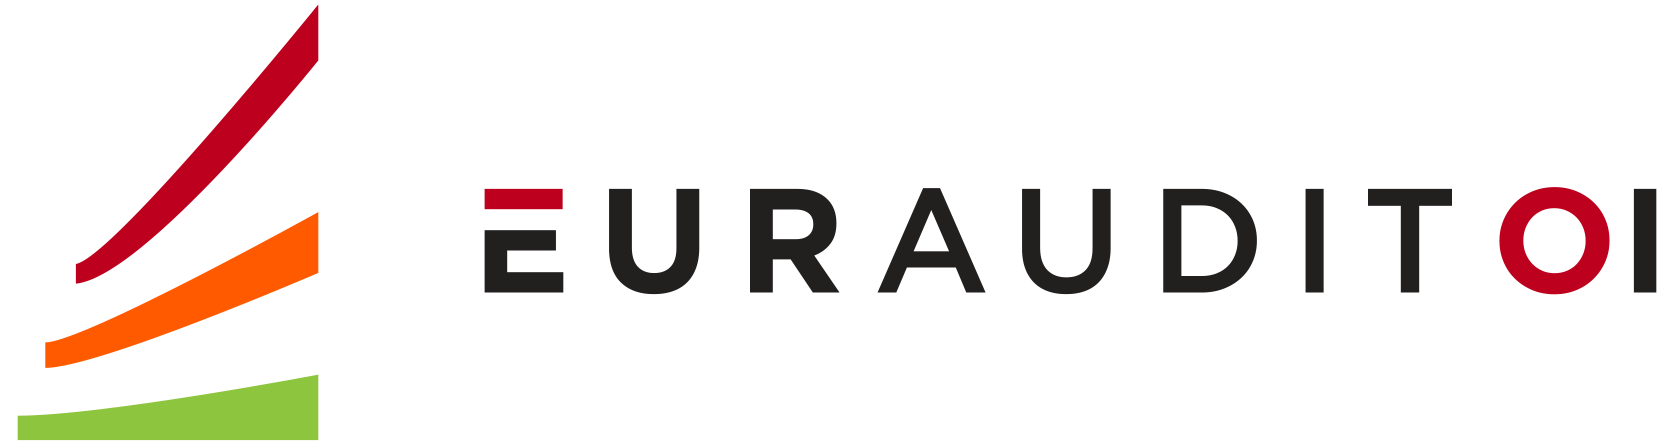 Euraudit OI_logo_color_hor_trans